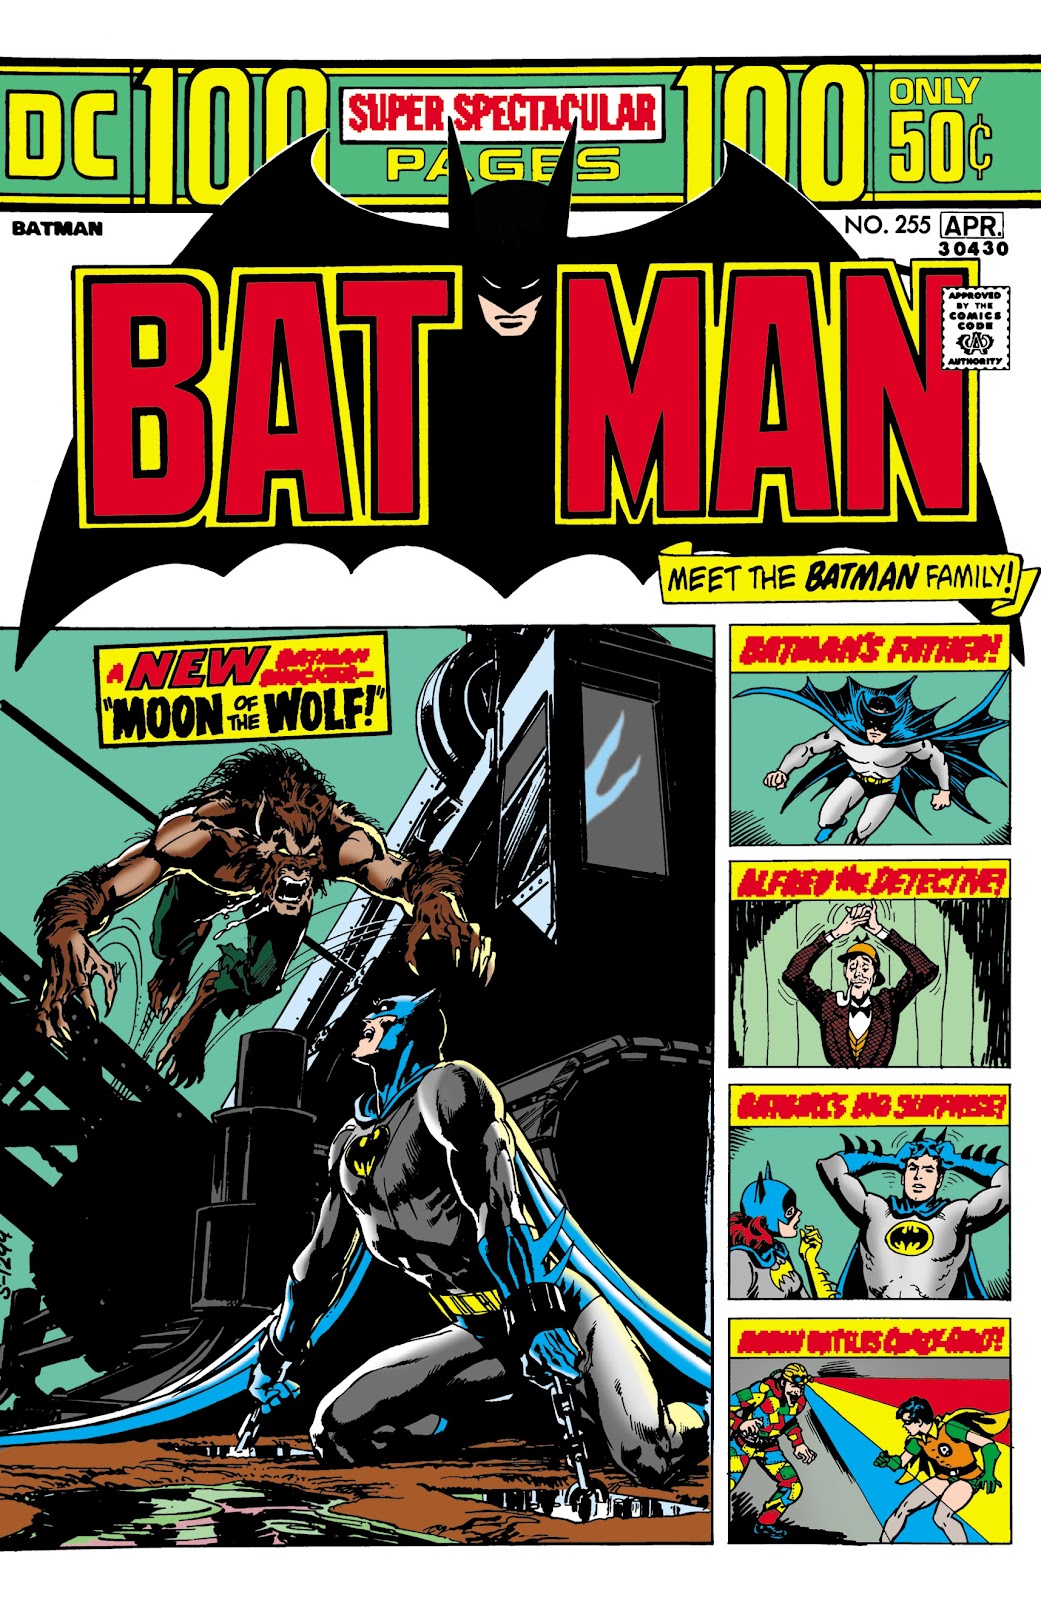 Read Batman (1940) Issue #255 Online